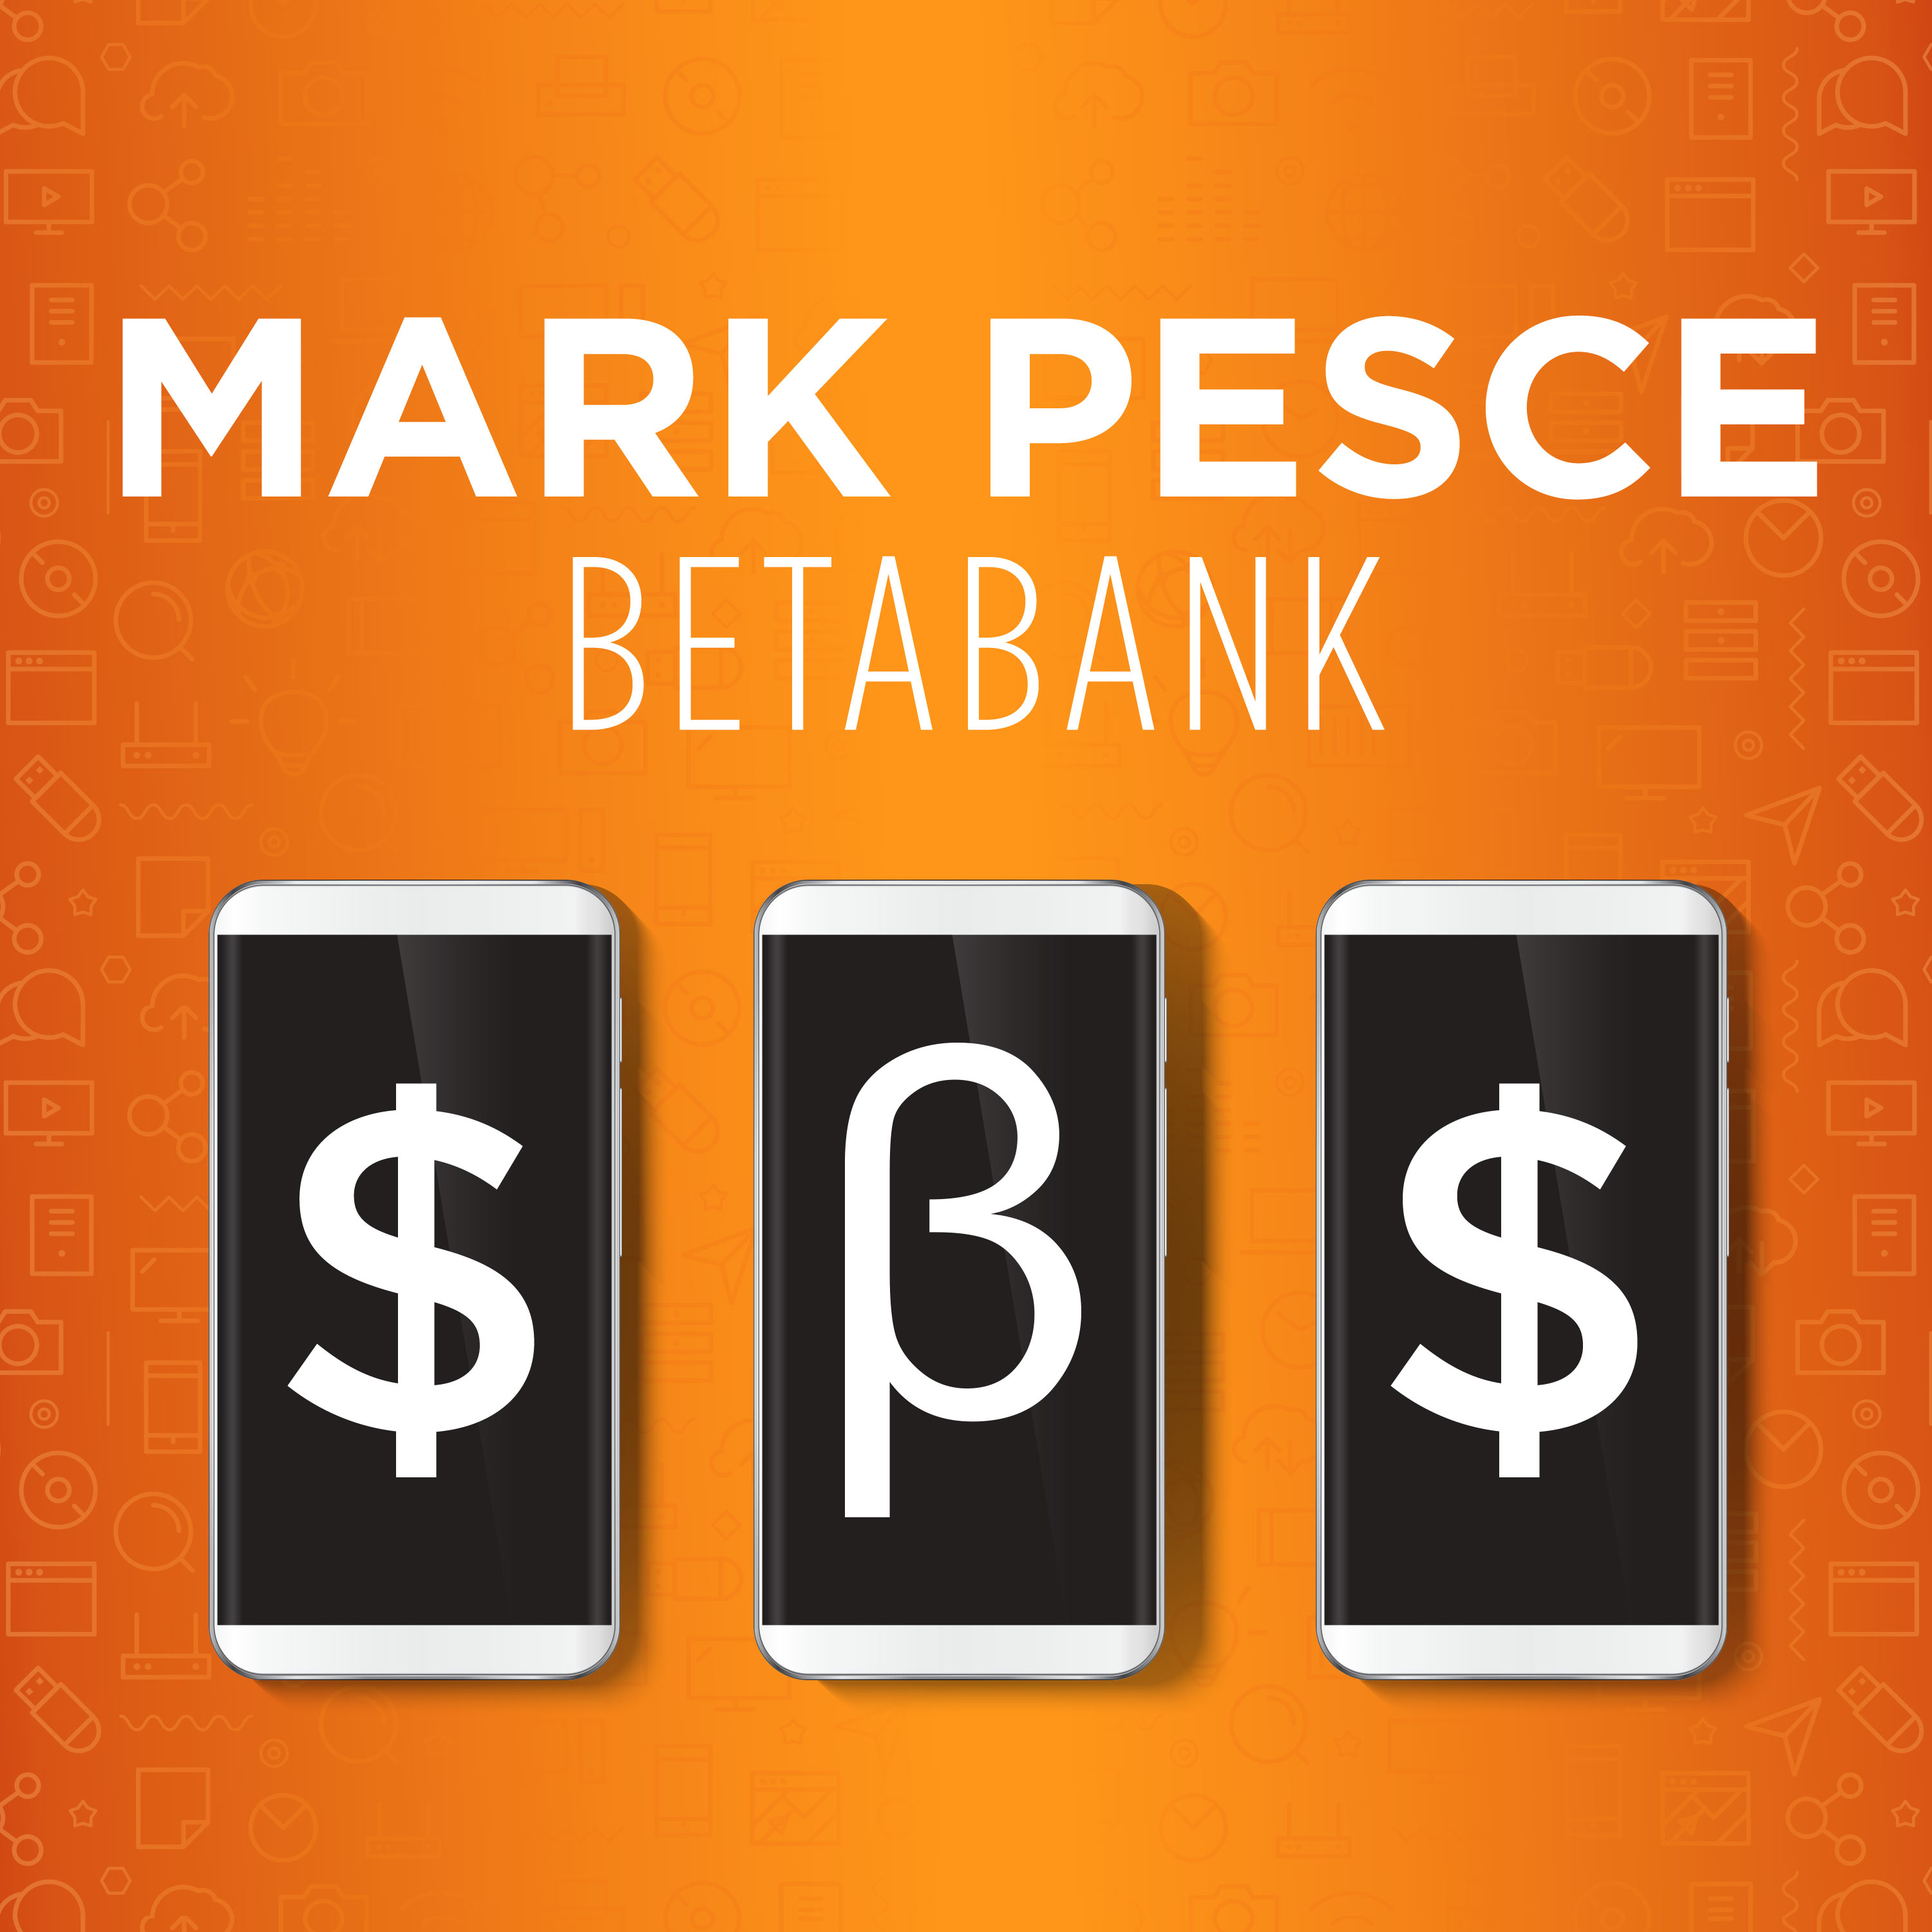 Betabank - A Better Bank?